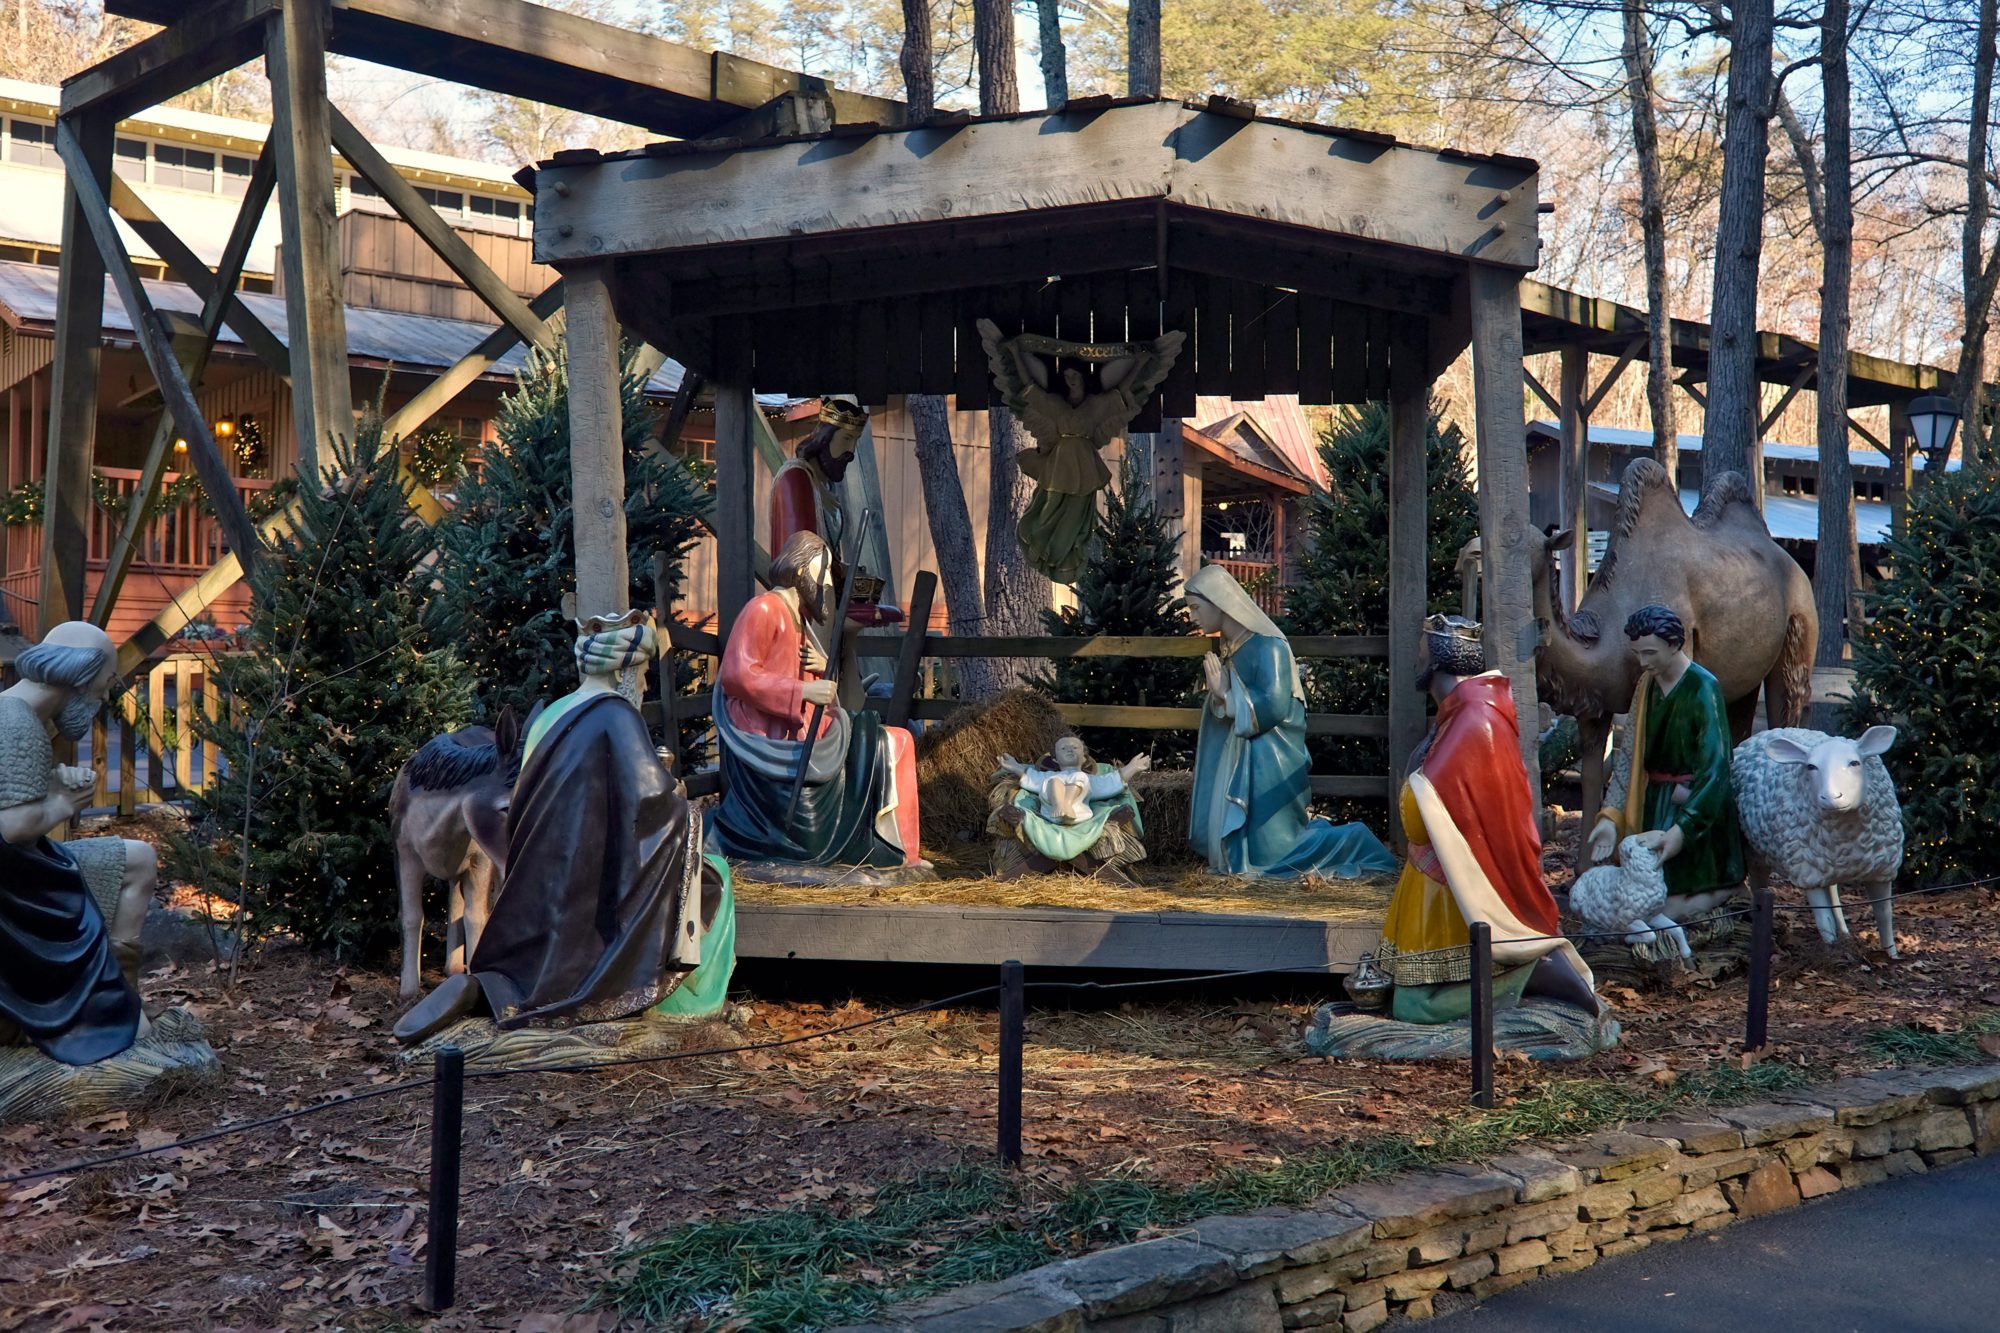 The nativity at Dollywood